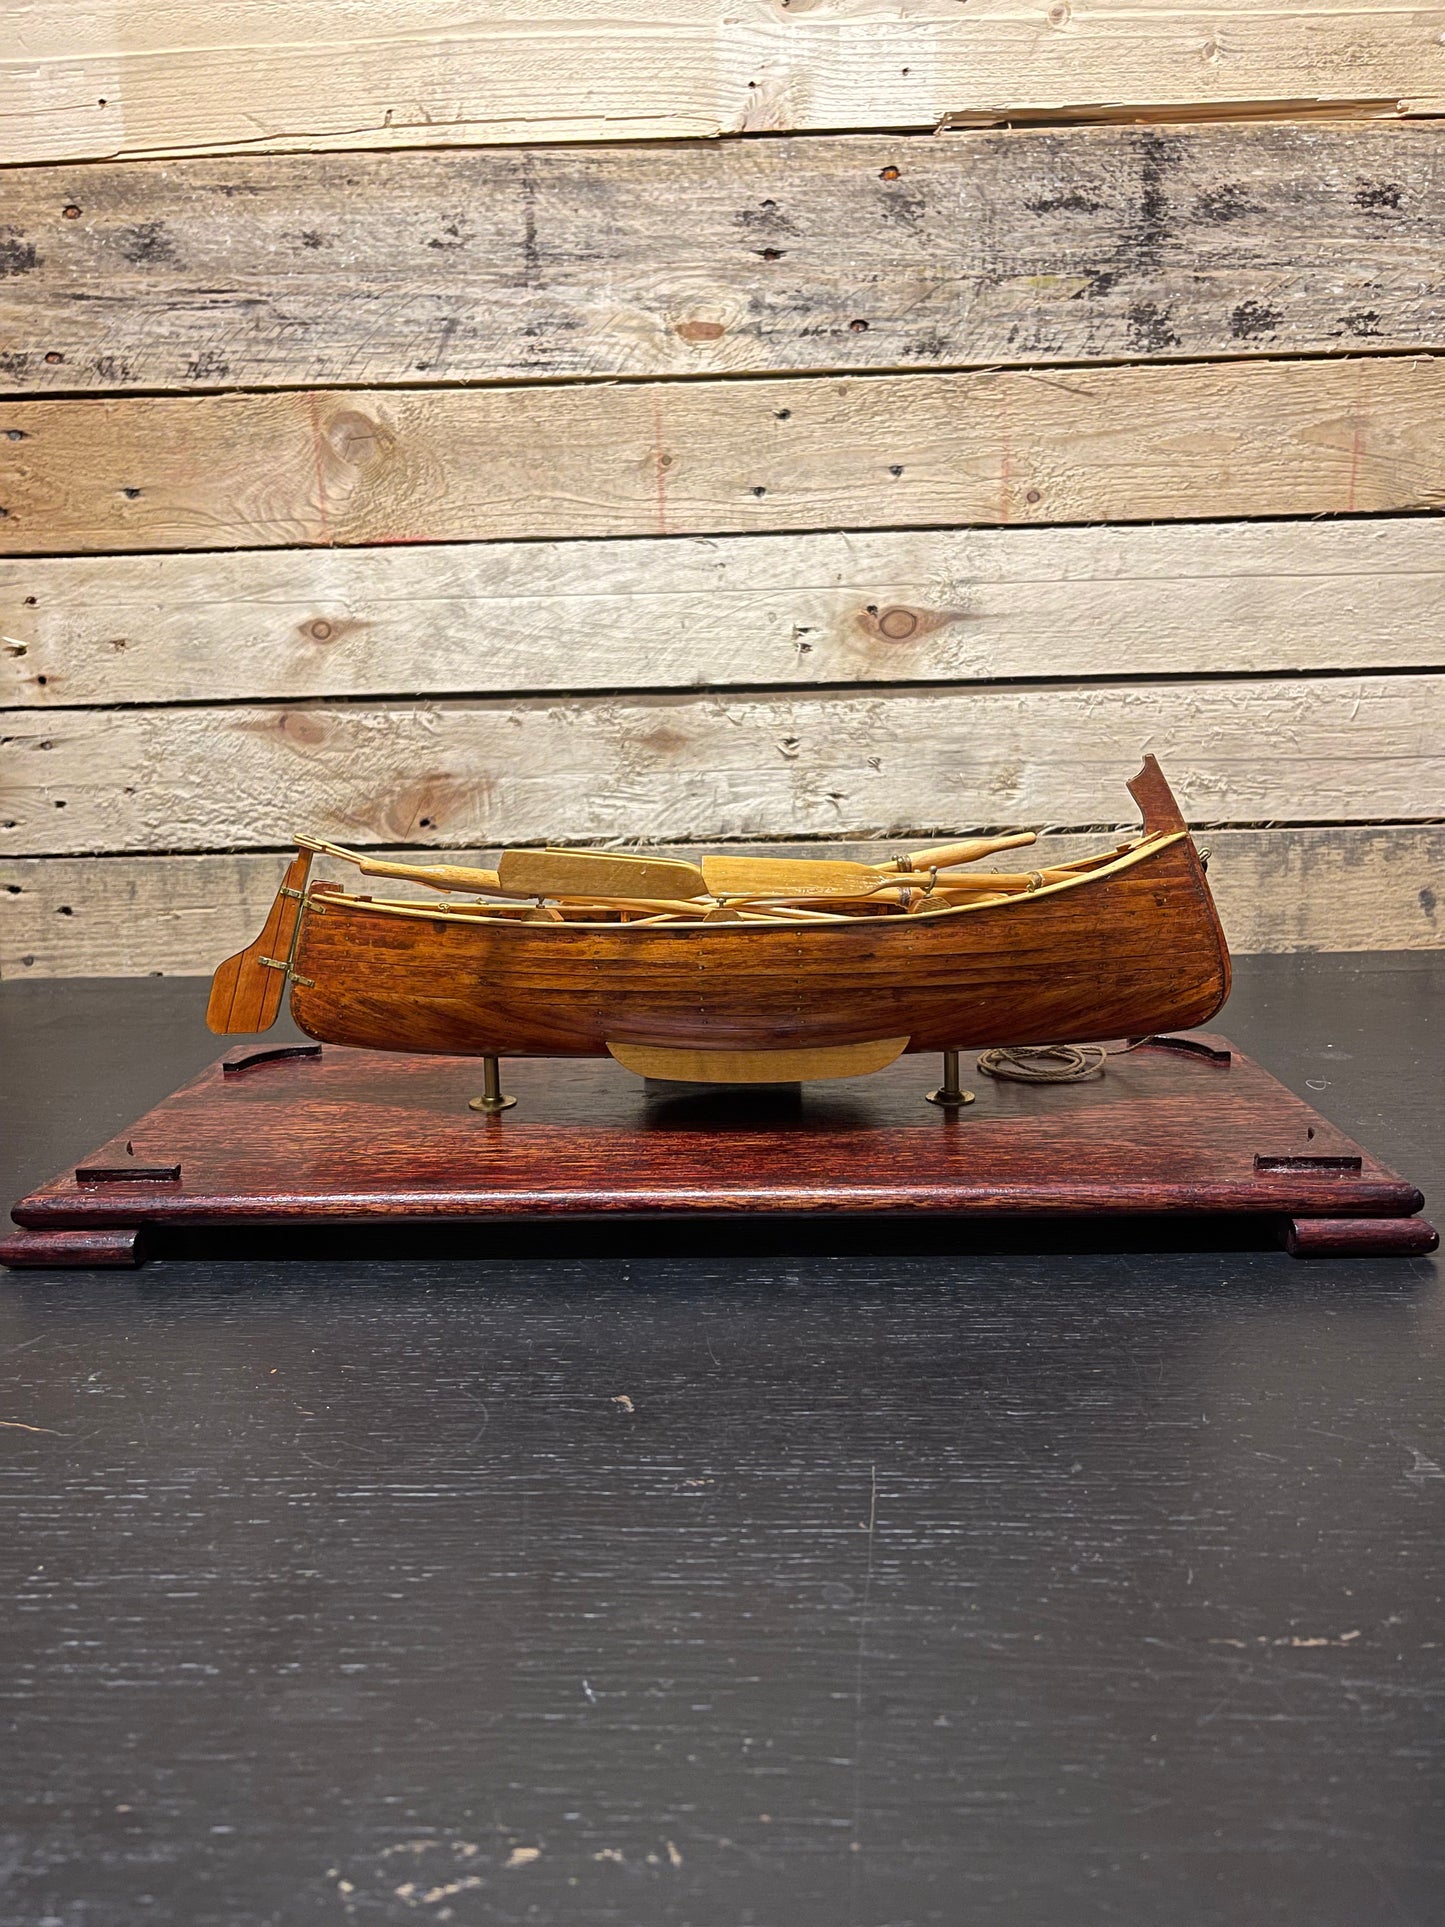 Scratch Built Classic Italian Gozzo Ligure Wooden Rowing Boat Circa 1970